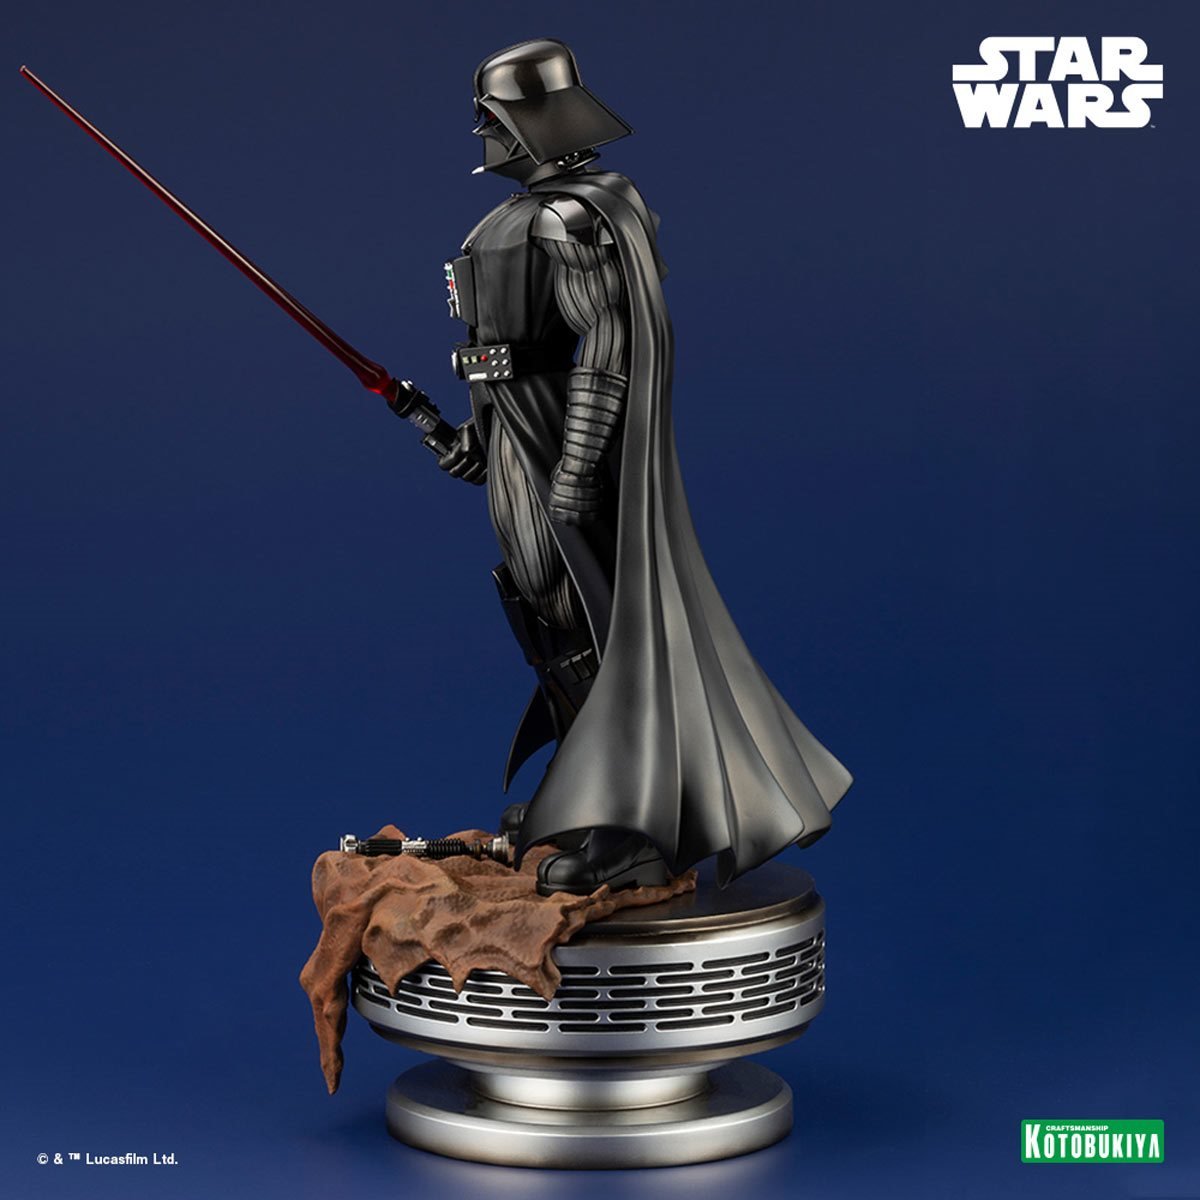 Star Wars Darth Vader The Ultimate Evil ARTFX Statue